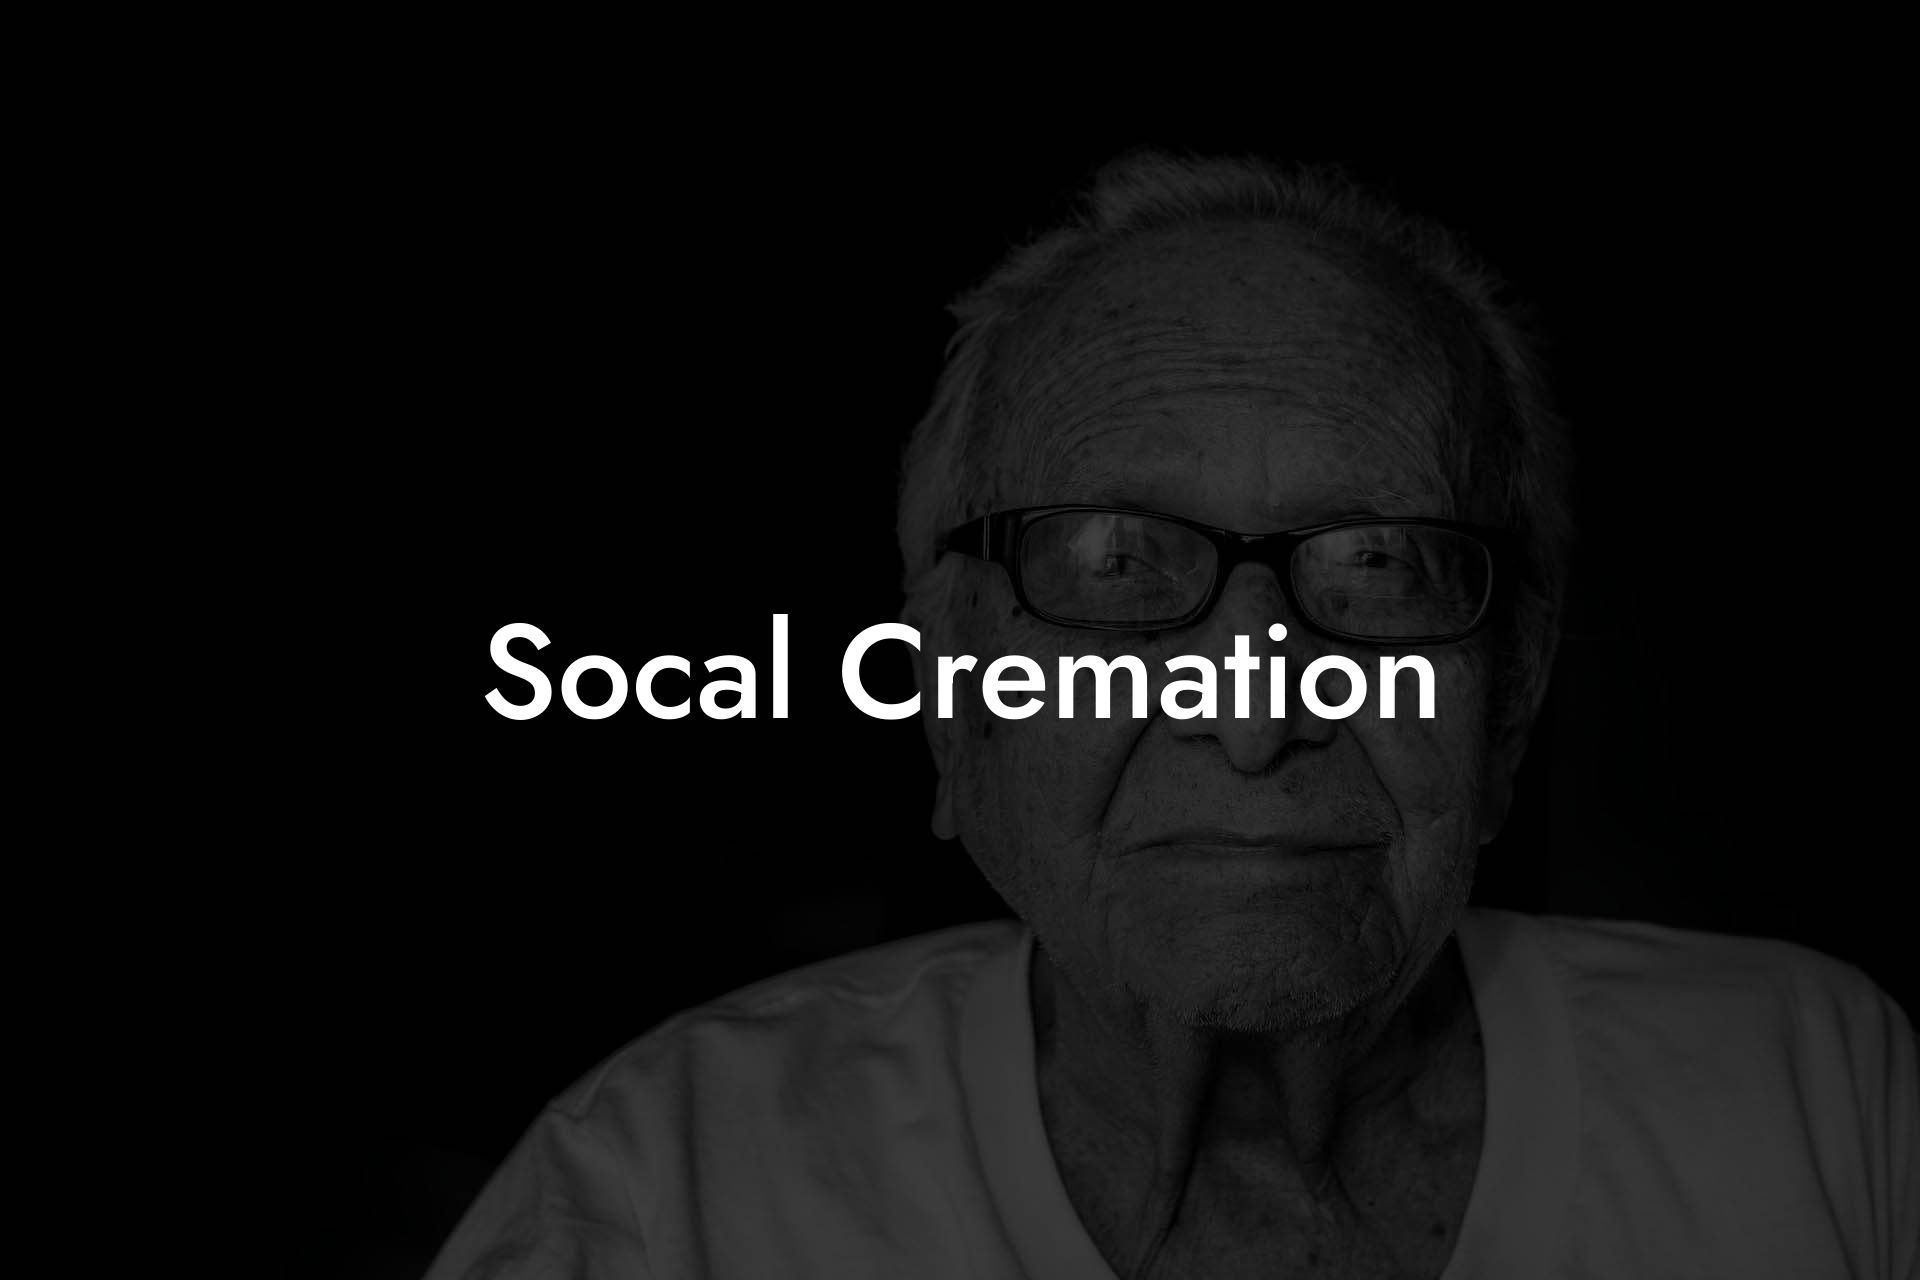 Socal Cremation